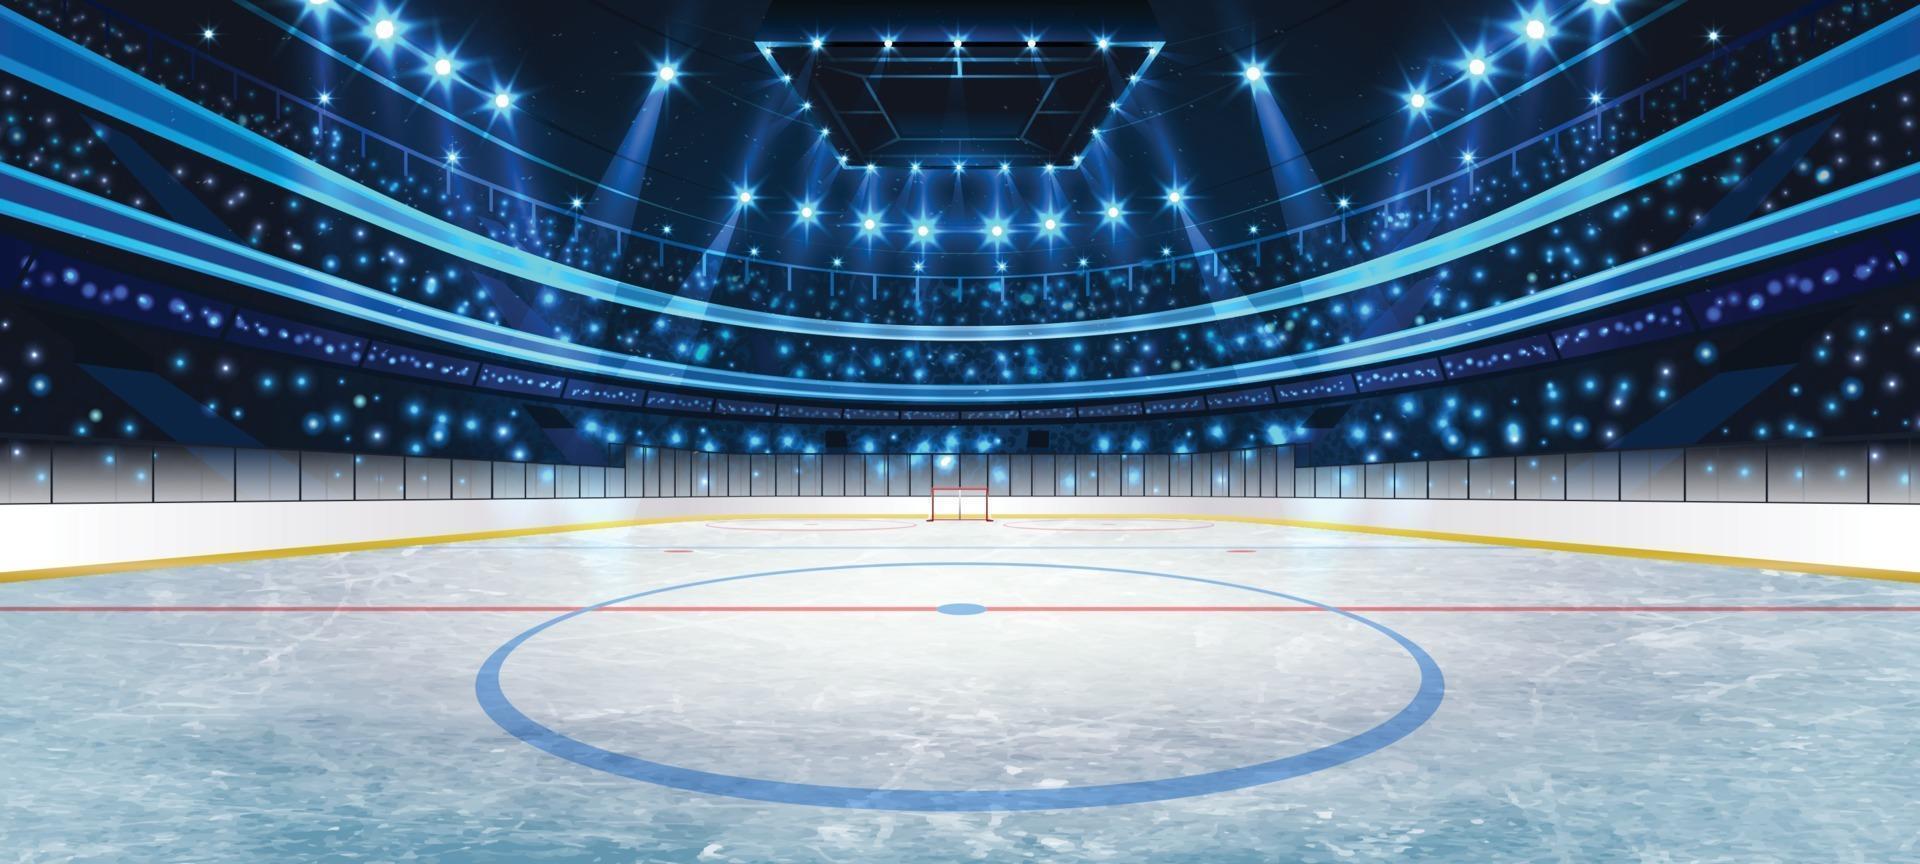 ijshockey arena achtergrond concept vector